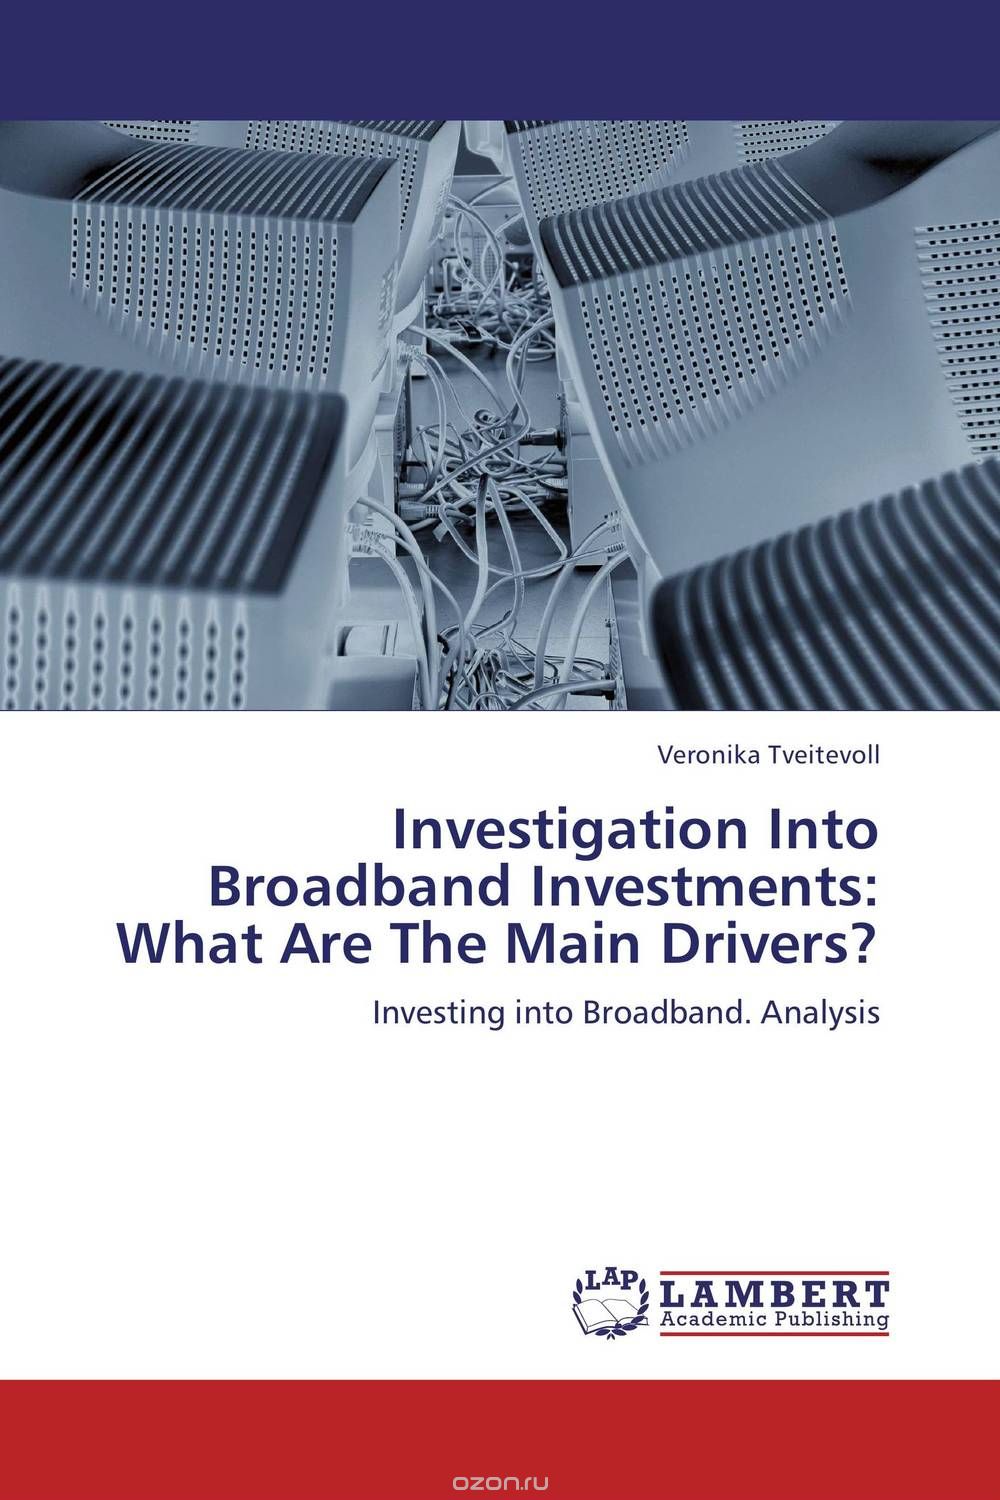 Скачать книгу "Investigation Into Broadband Investments: What Are The Main Drivers?"